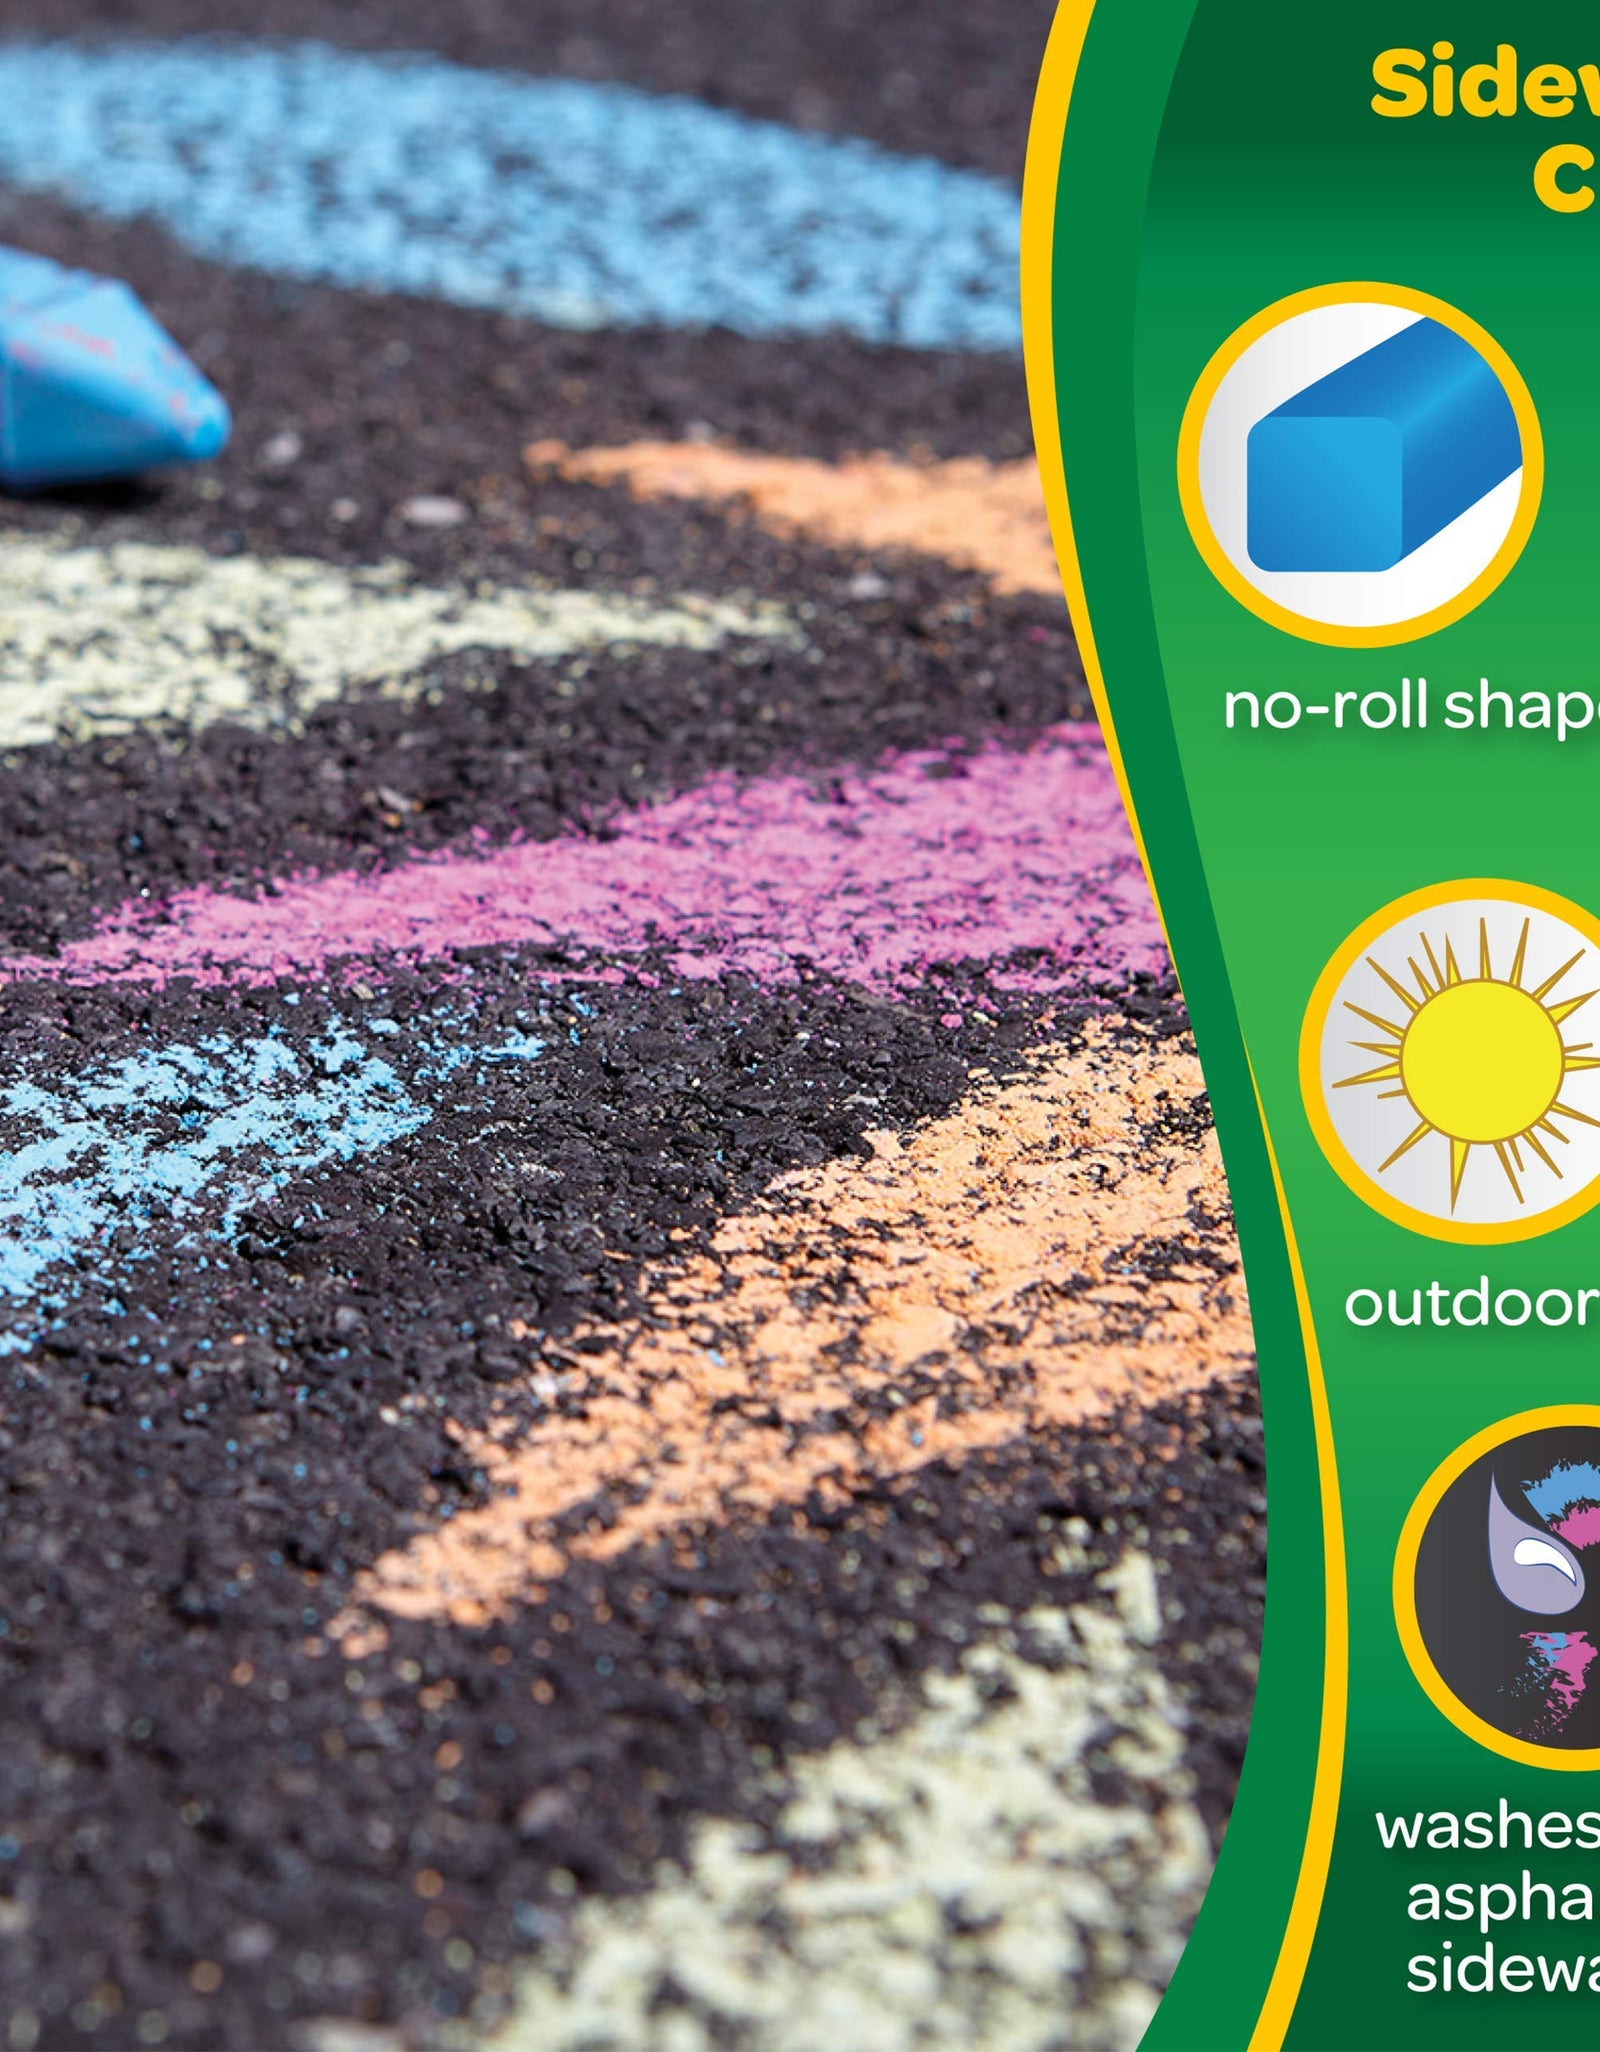 Crayola Washable Sidewalk Chalk Set, Outdoor Toy, Gift for Kids, 72Count (Amazon Exclusive)